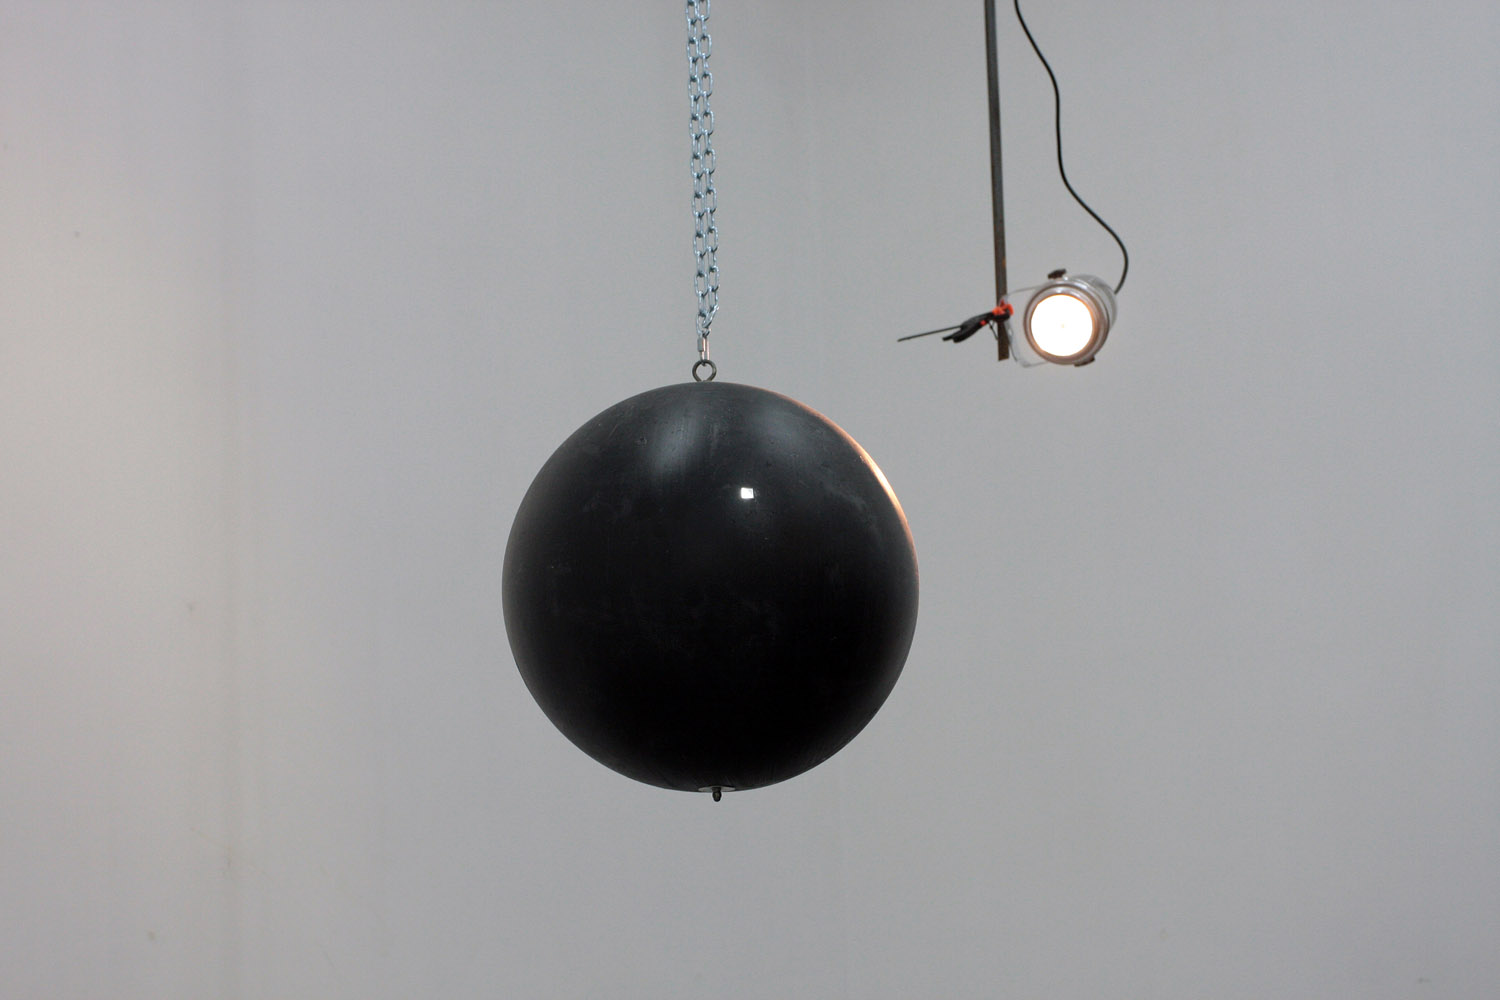 Untitled, 2010. Installation. Ball, mirror, chain, motor, spot light, reflection.